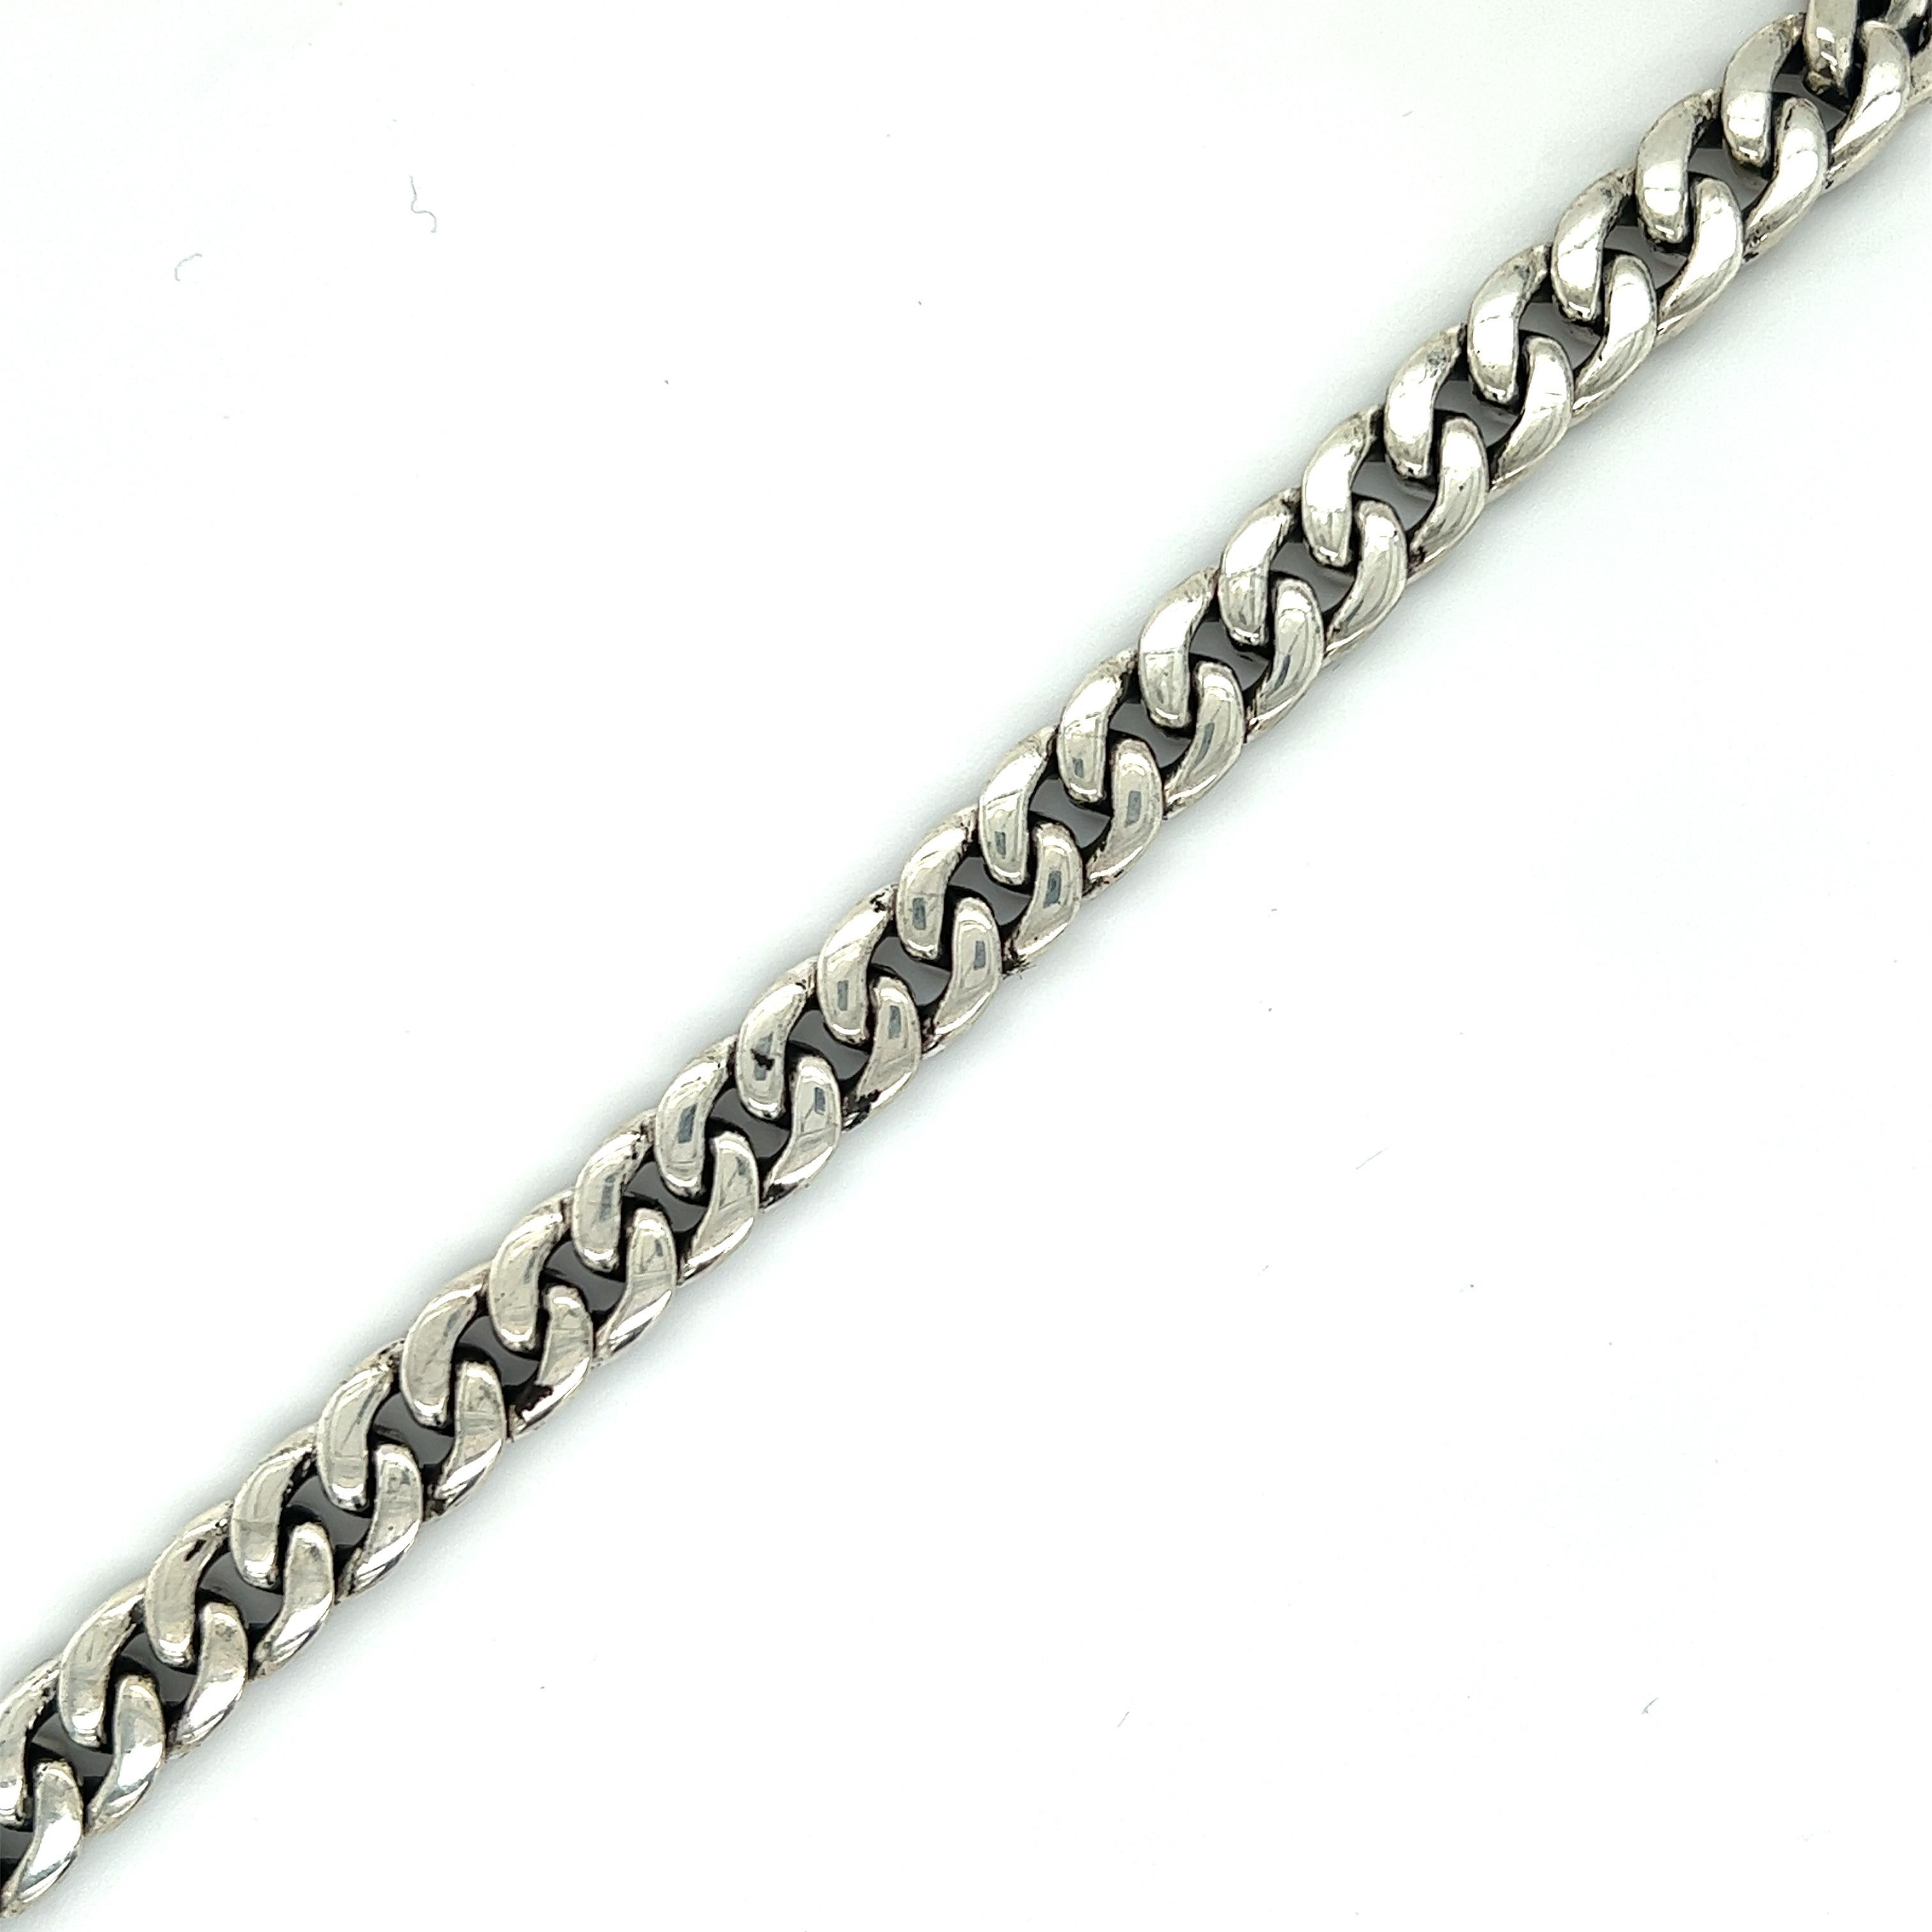 Contemporary David Yurman Curb Chain Bracelet in Sterling Silver with Pavé Black Diamonds 